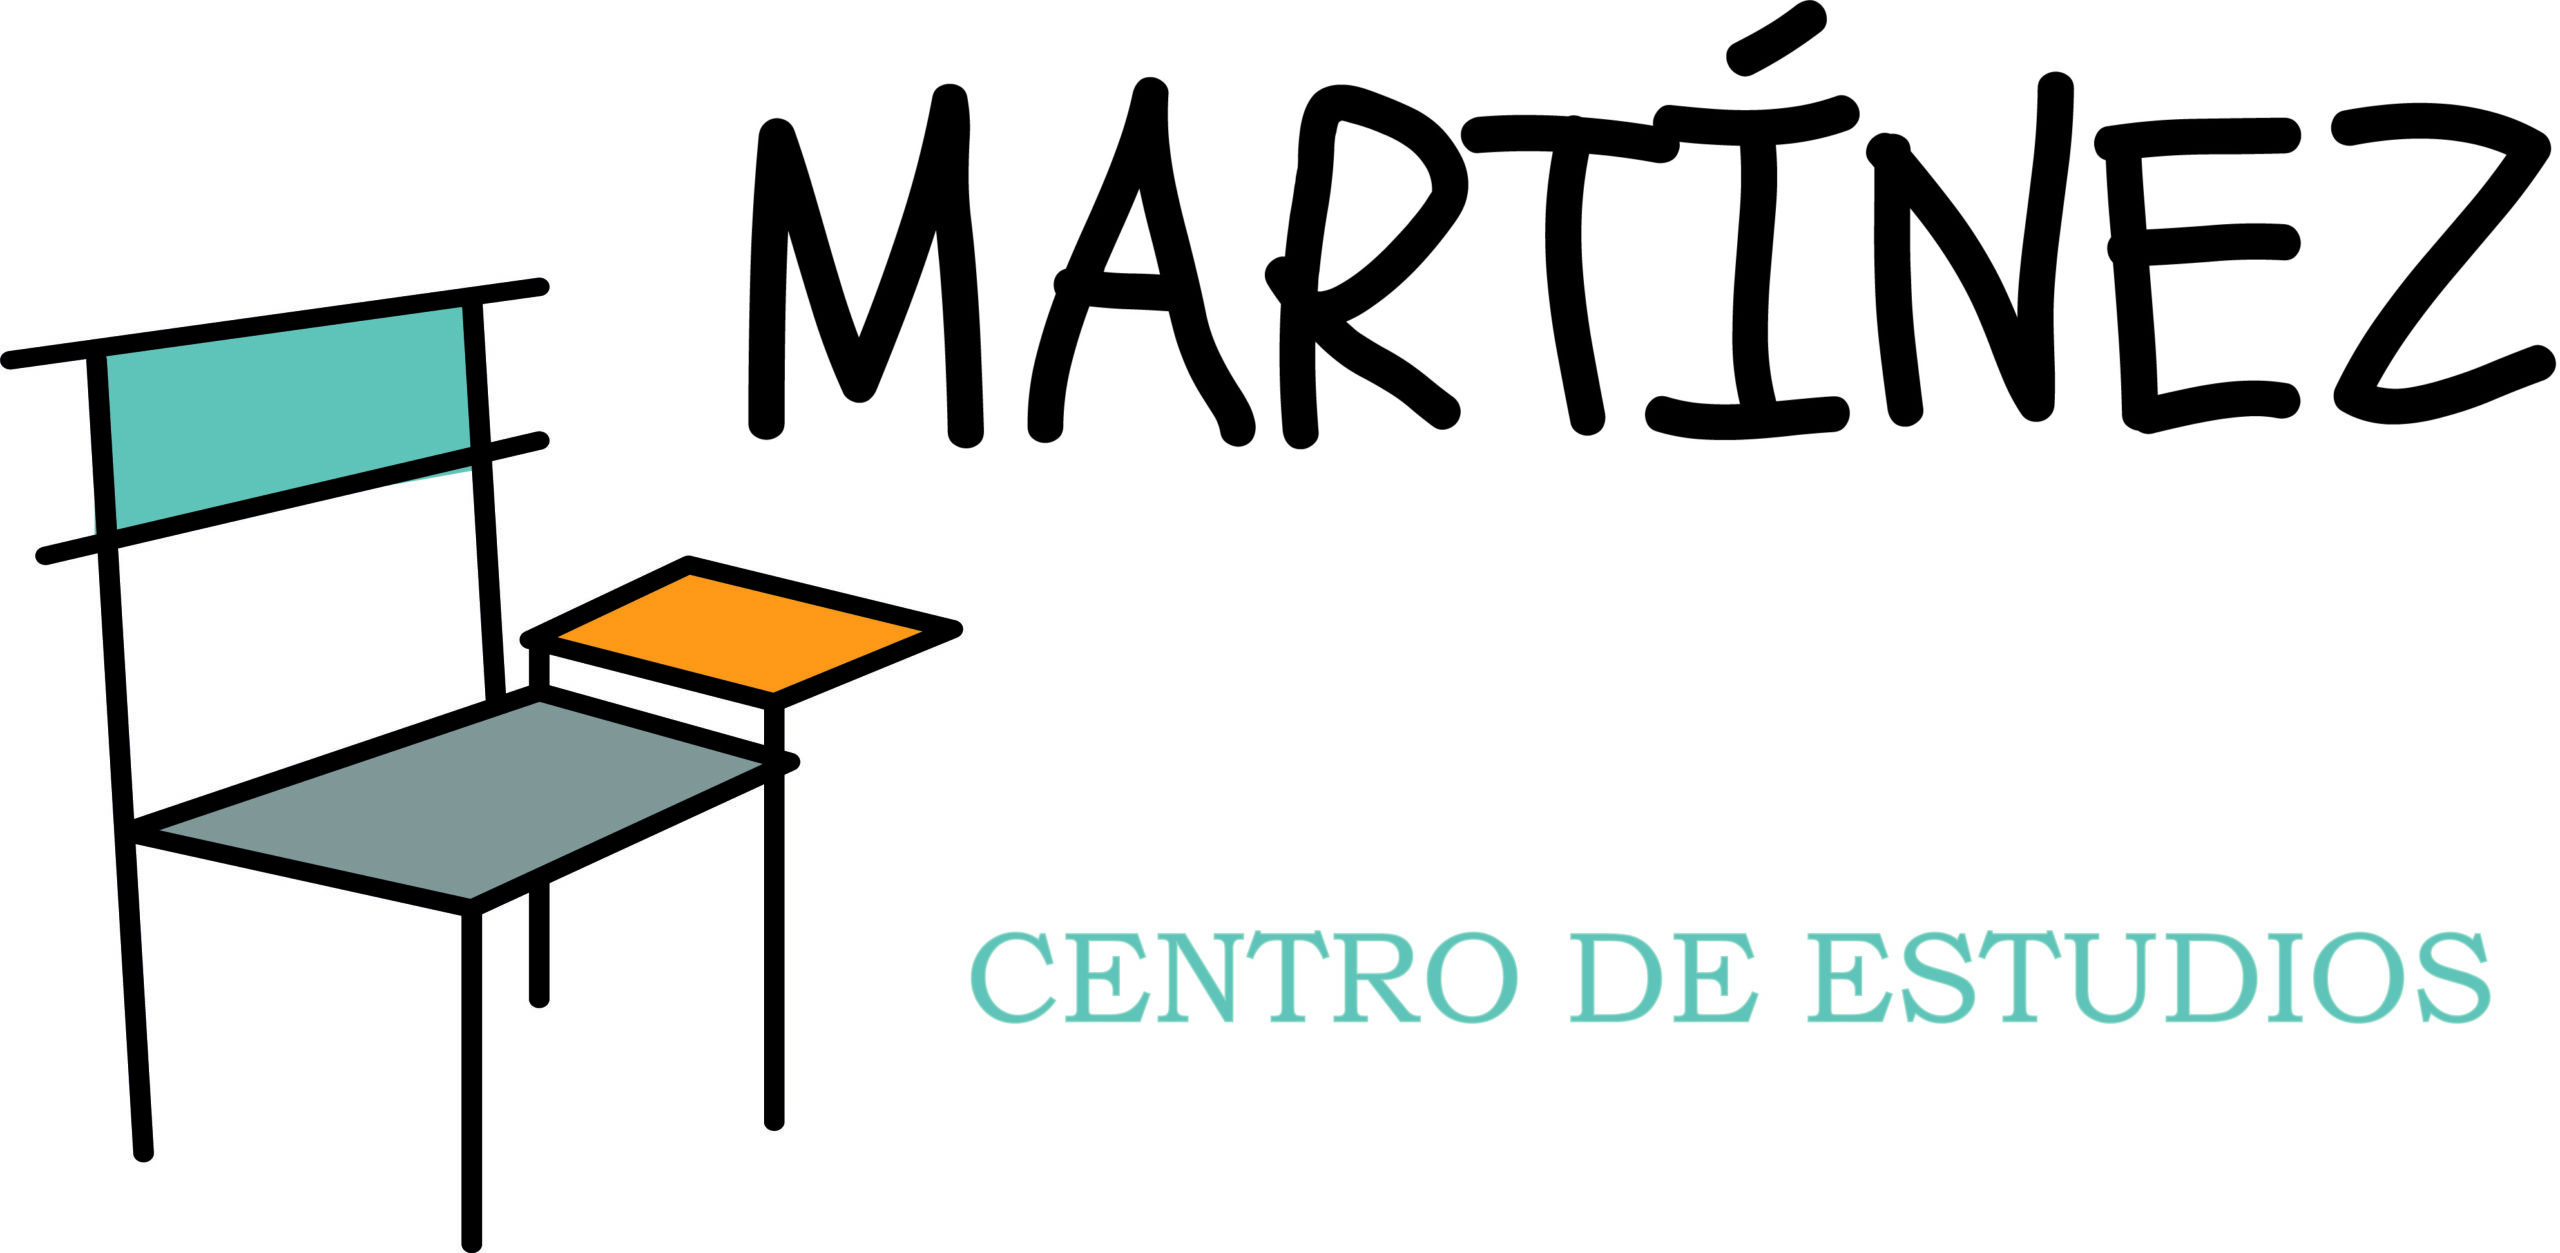 Martinez Centro de Estudios